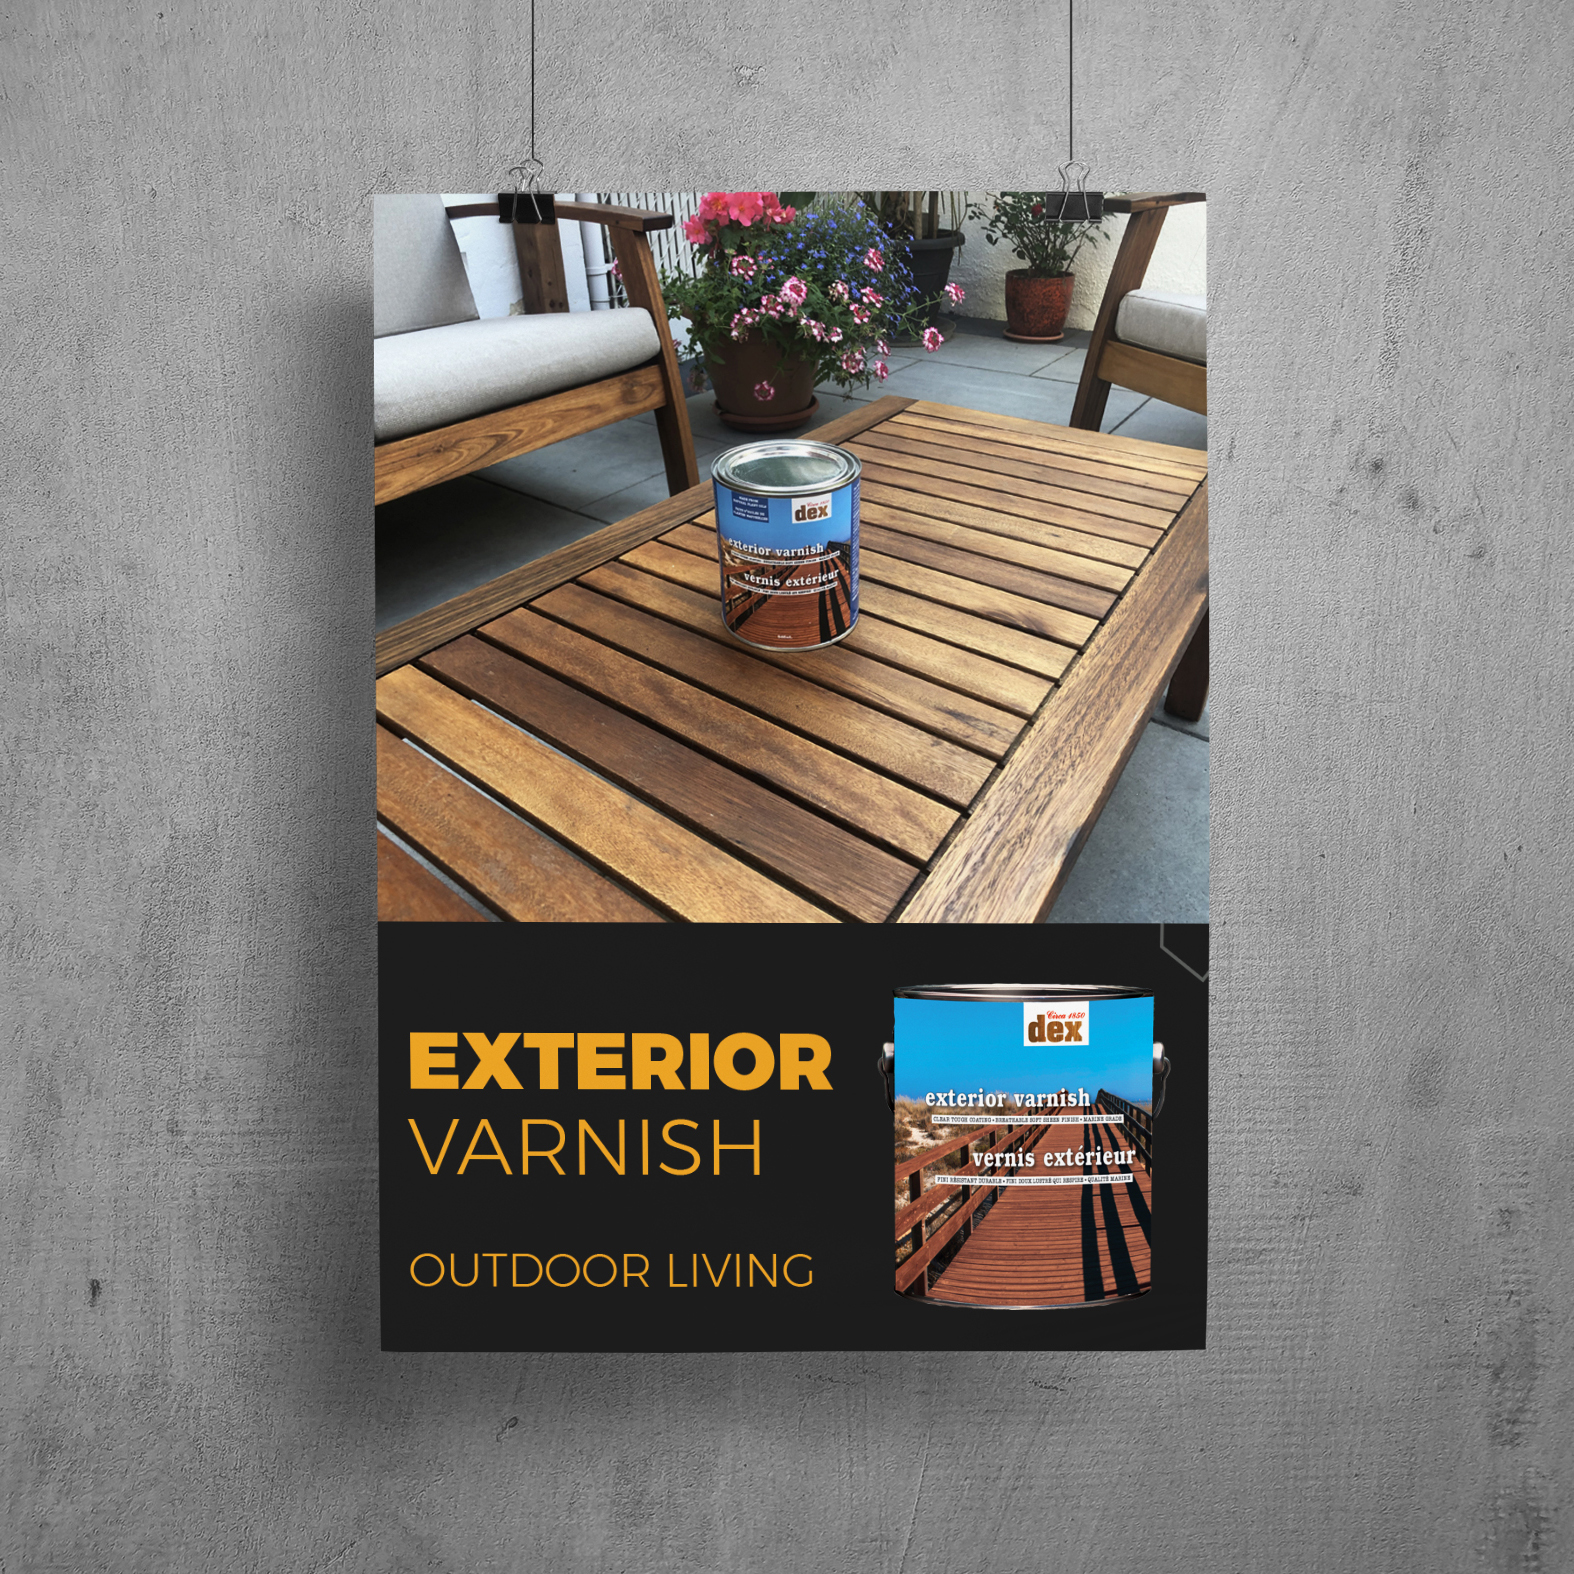 DEX Exterior Varnish Outdoor Furniture